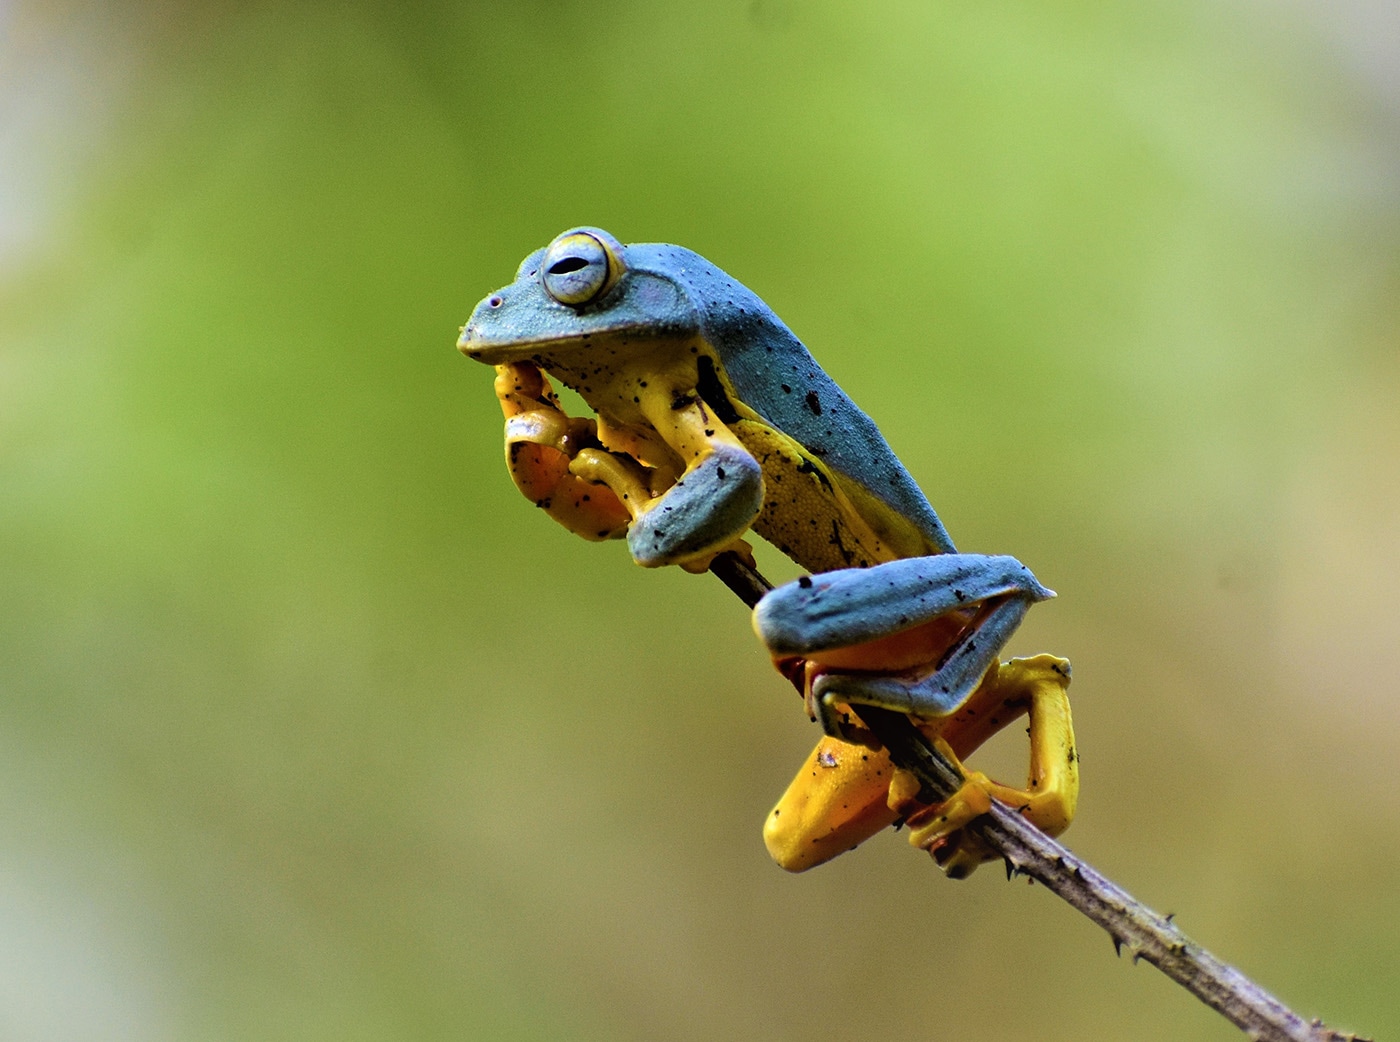 Twin-spotted Flying Frog Rhacophorus bipunctatus - Satchari National Park - Tania Akhter Bangladesh